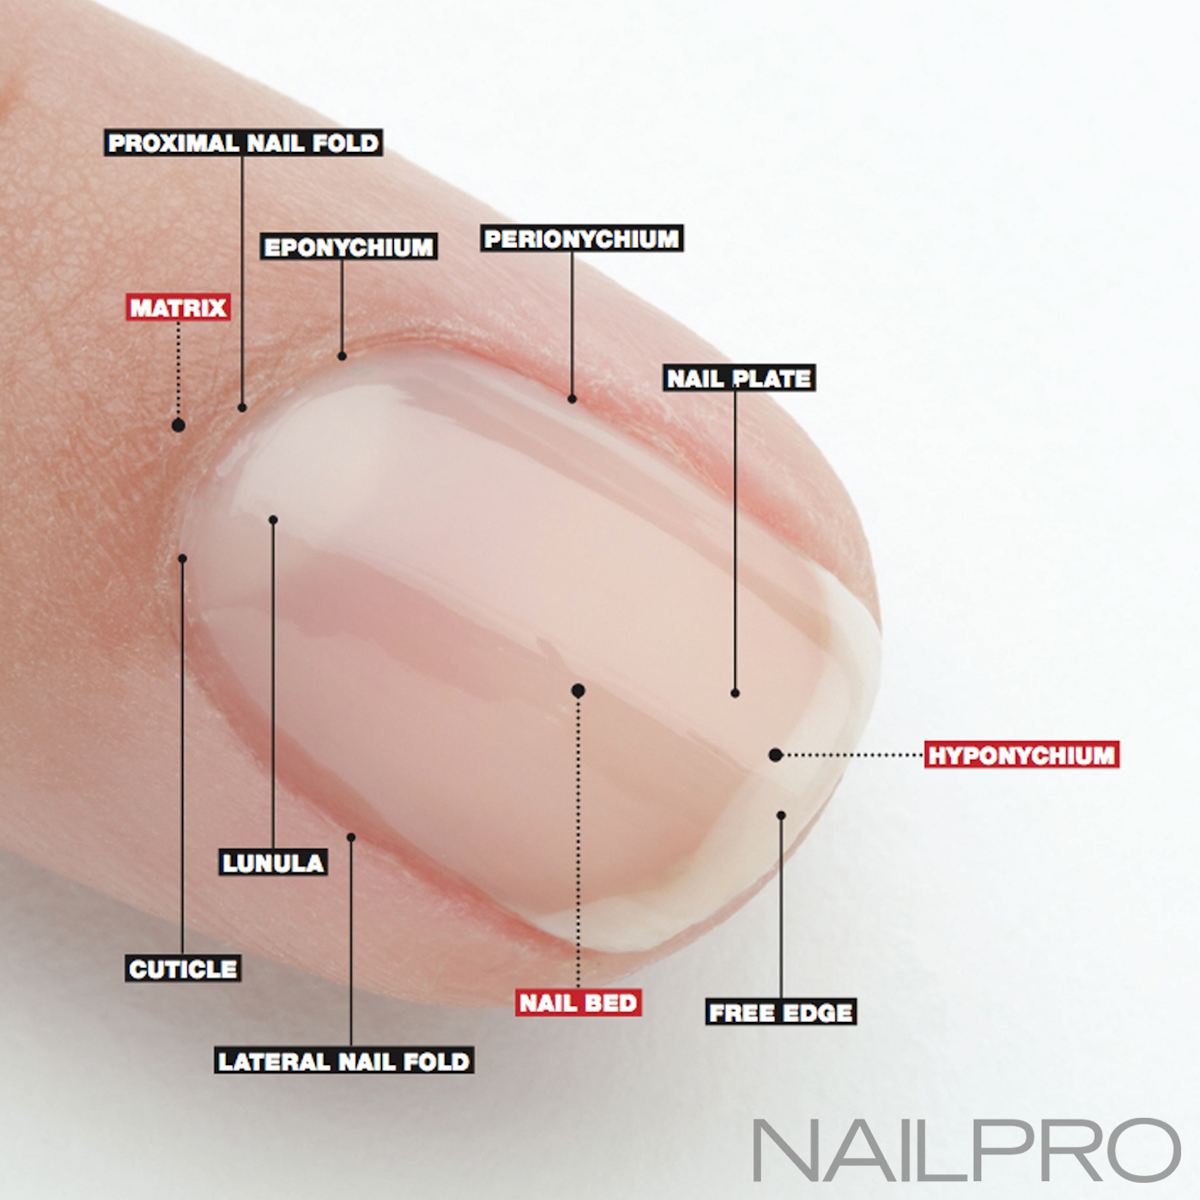 Nail Anatomy A Professional Primer On The Parts Of The Nail Nailpro